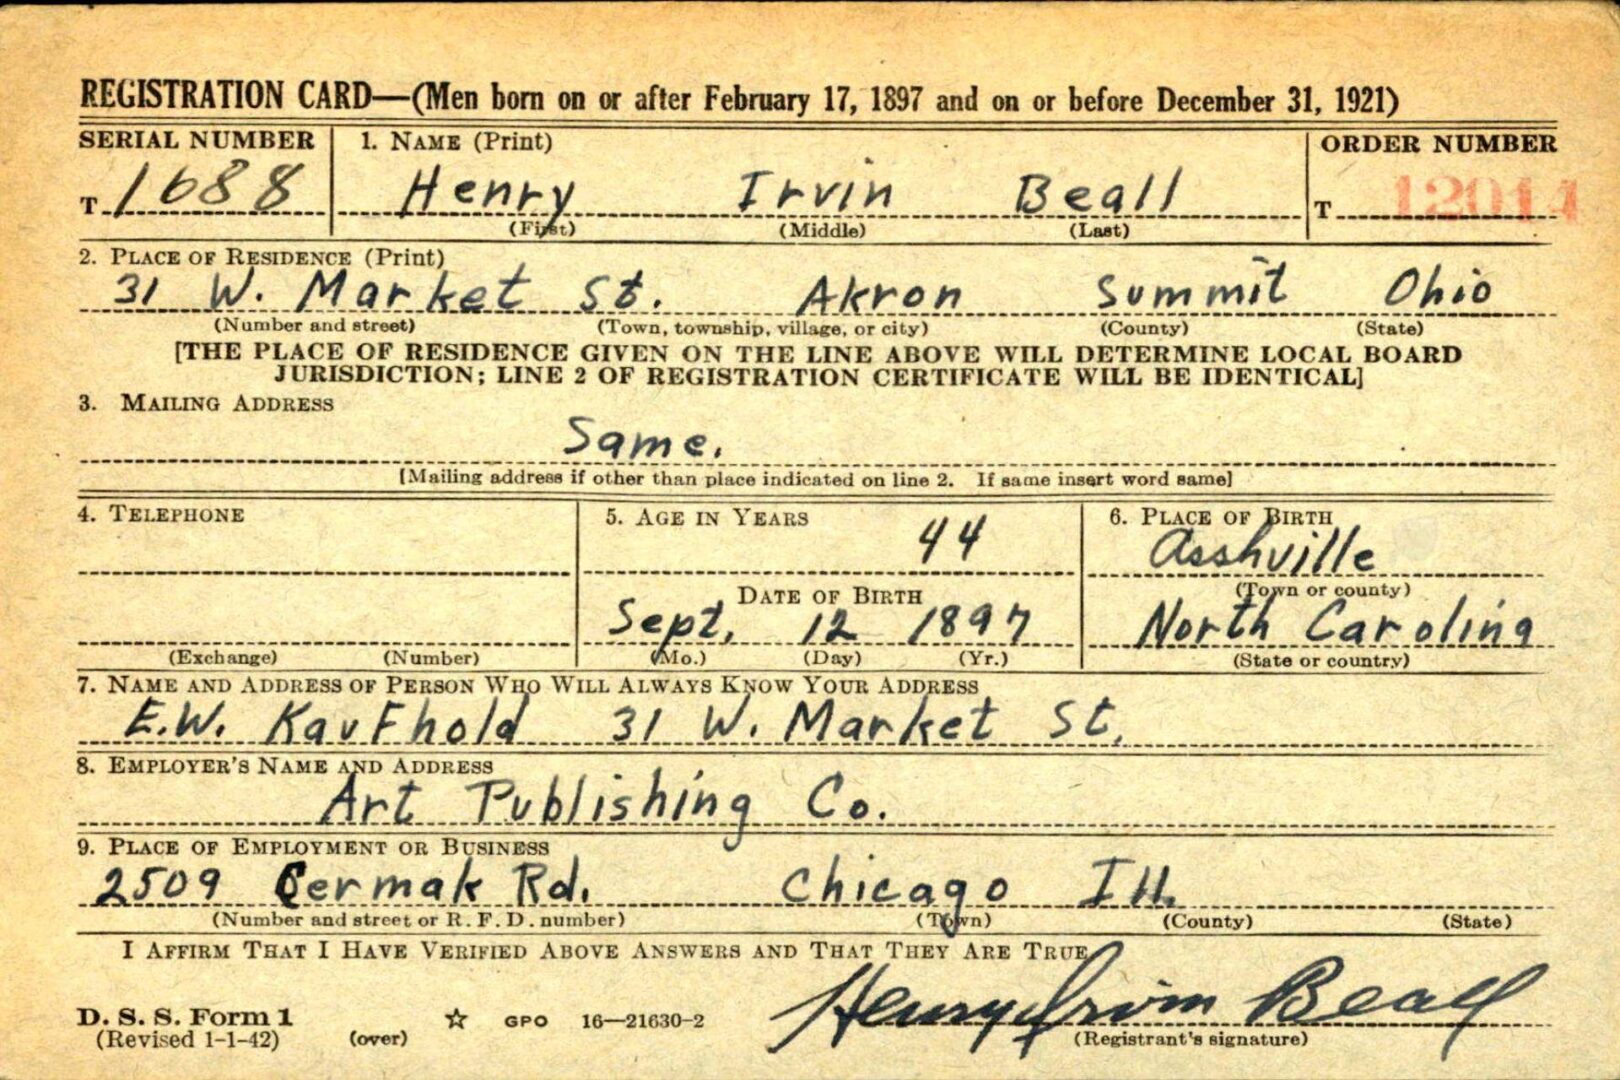 U.S. WWII Draft Card for Henri Irvin Beall